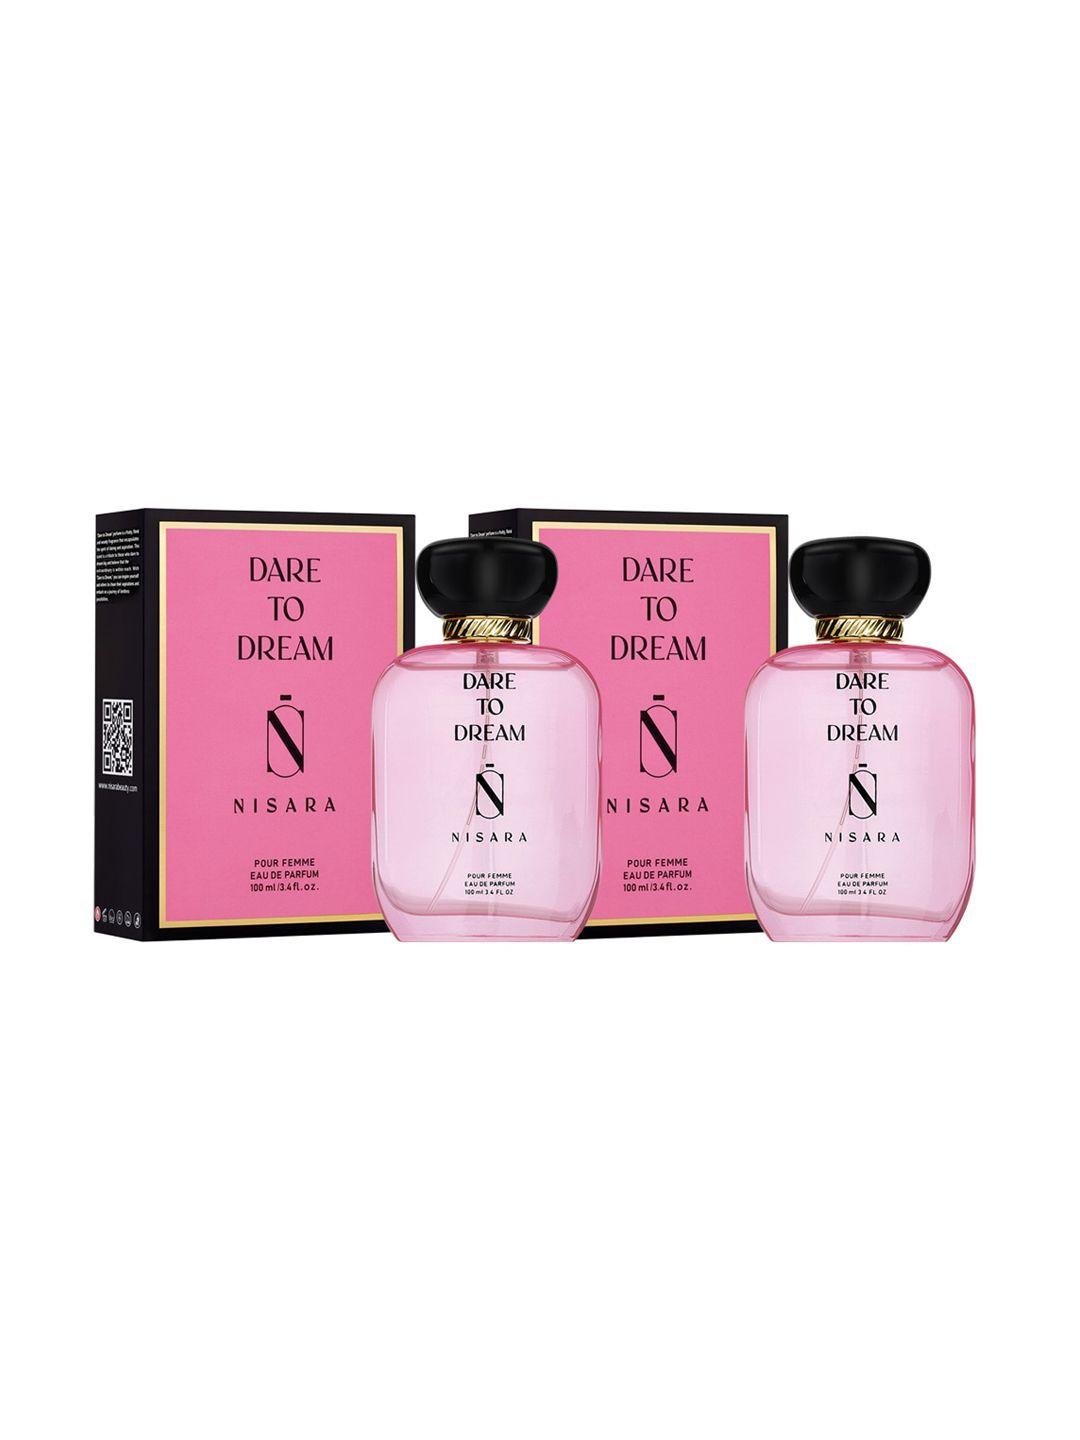 nisara set of 2 dare to dream fragrance eau de perfume - 100ml each